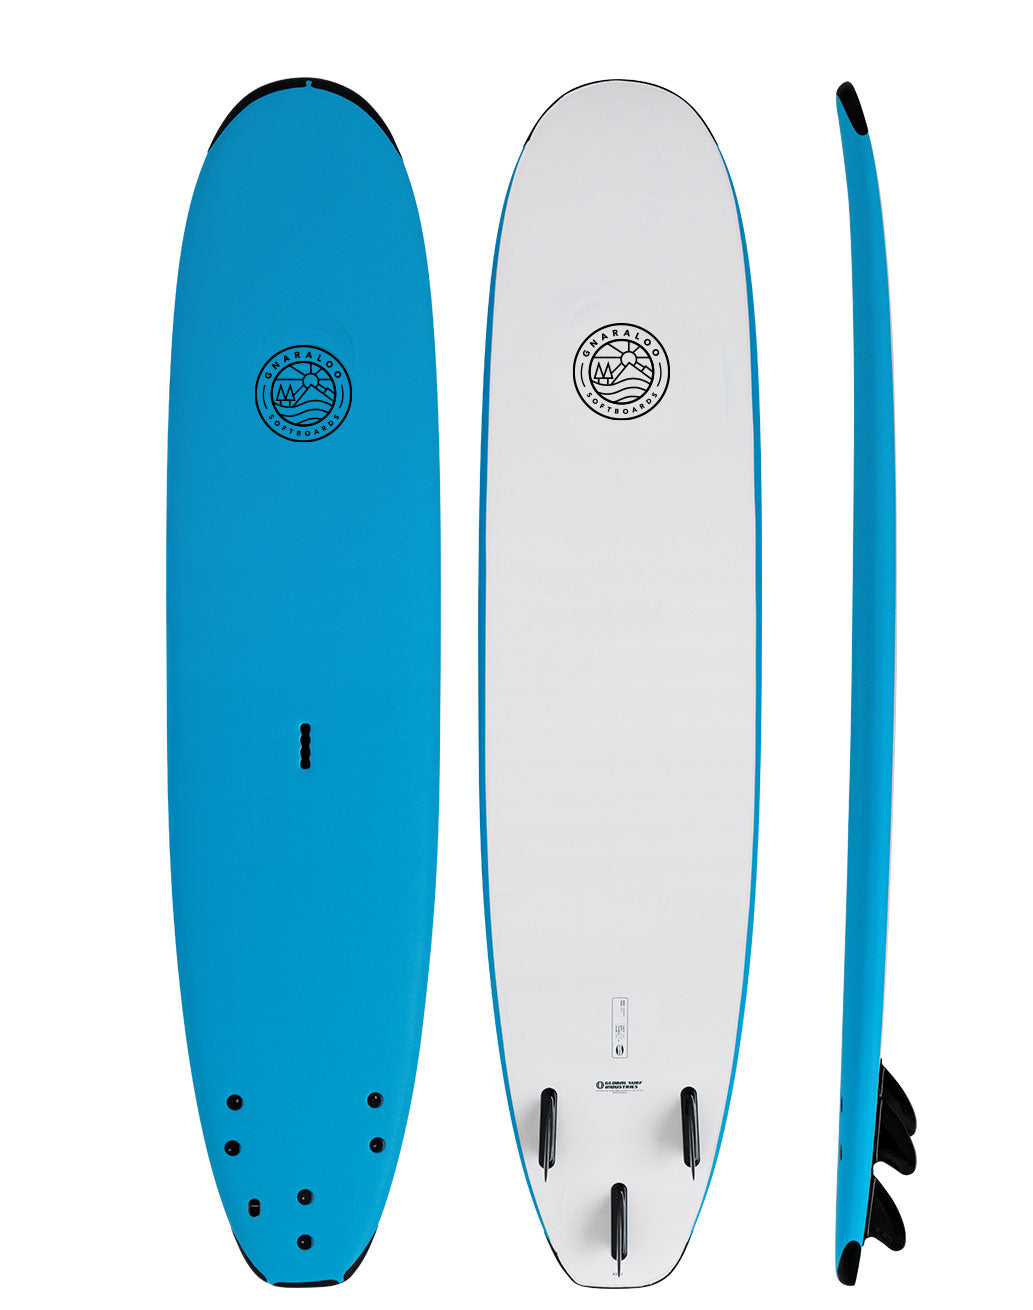 Gnaraloo soft surfboard in blue